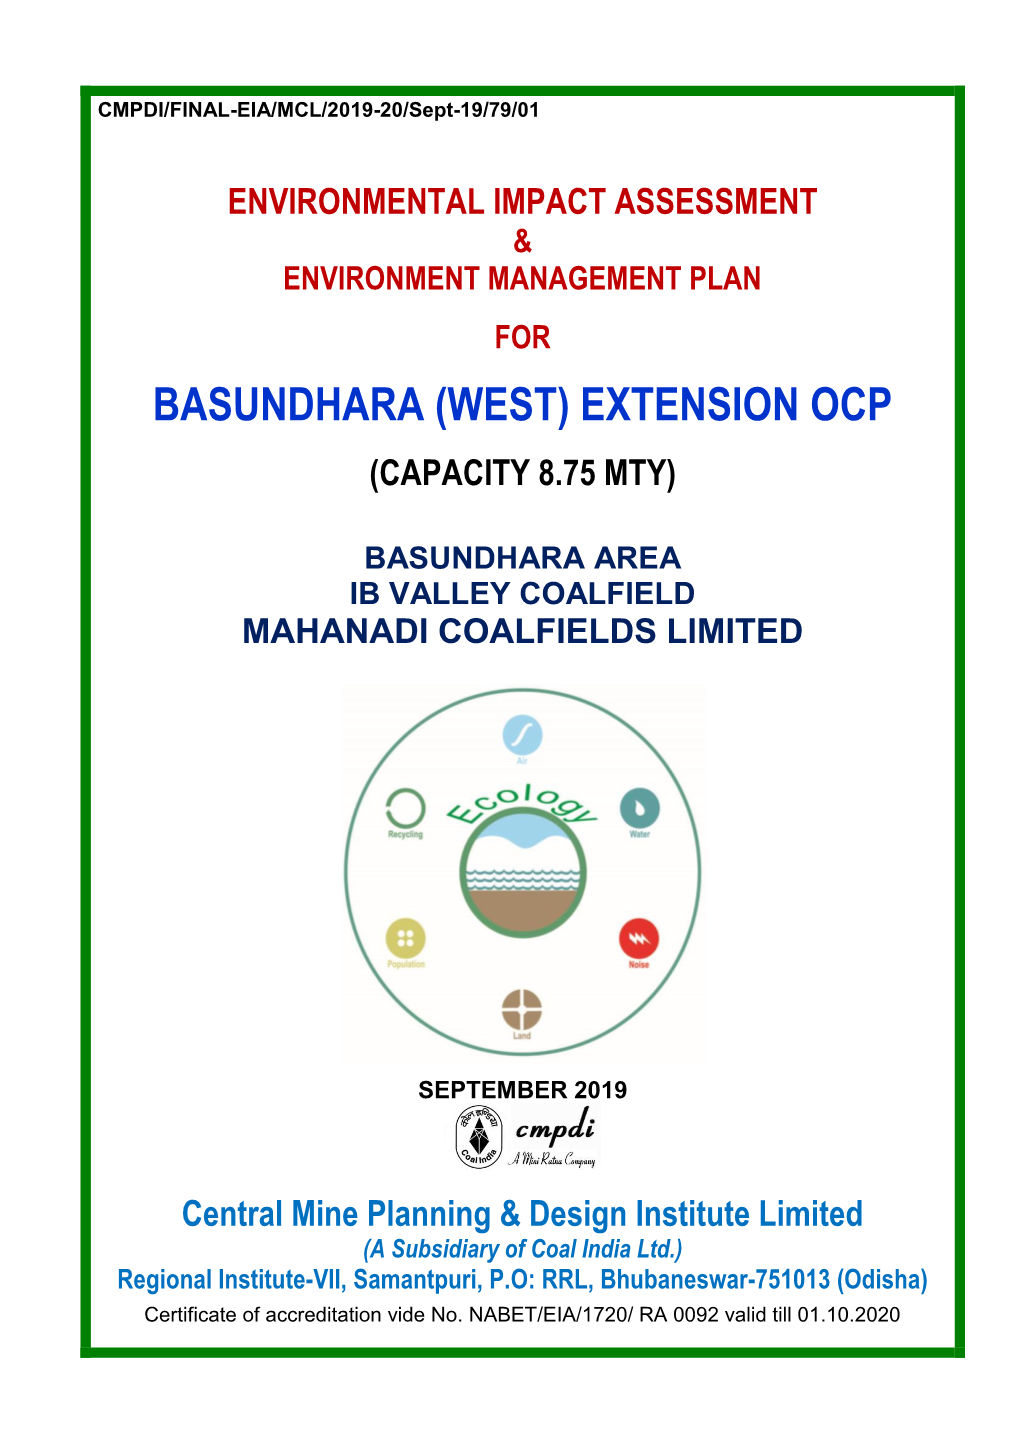 Basundhara (West) Extension Ocp